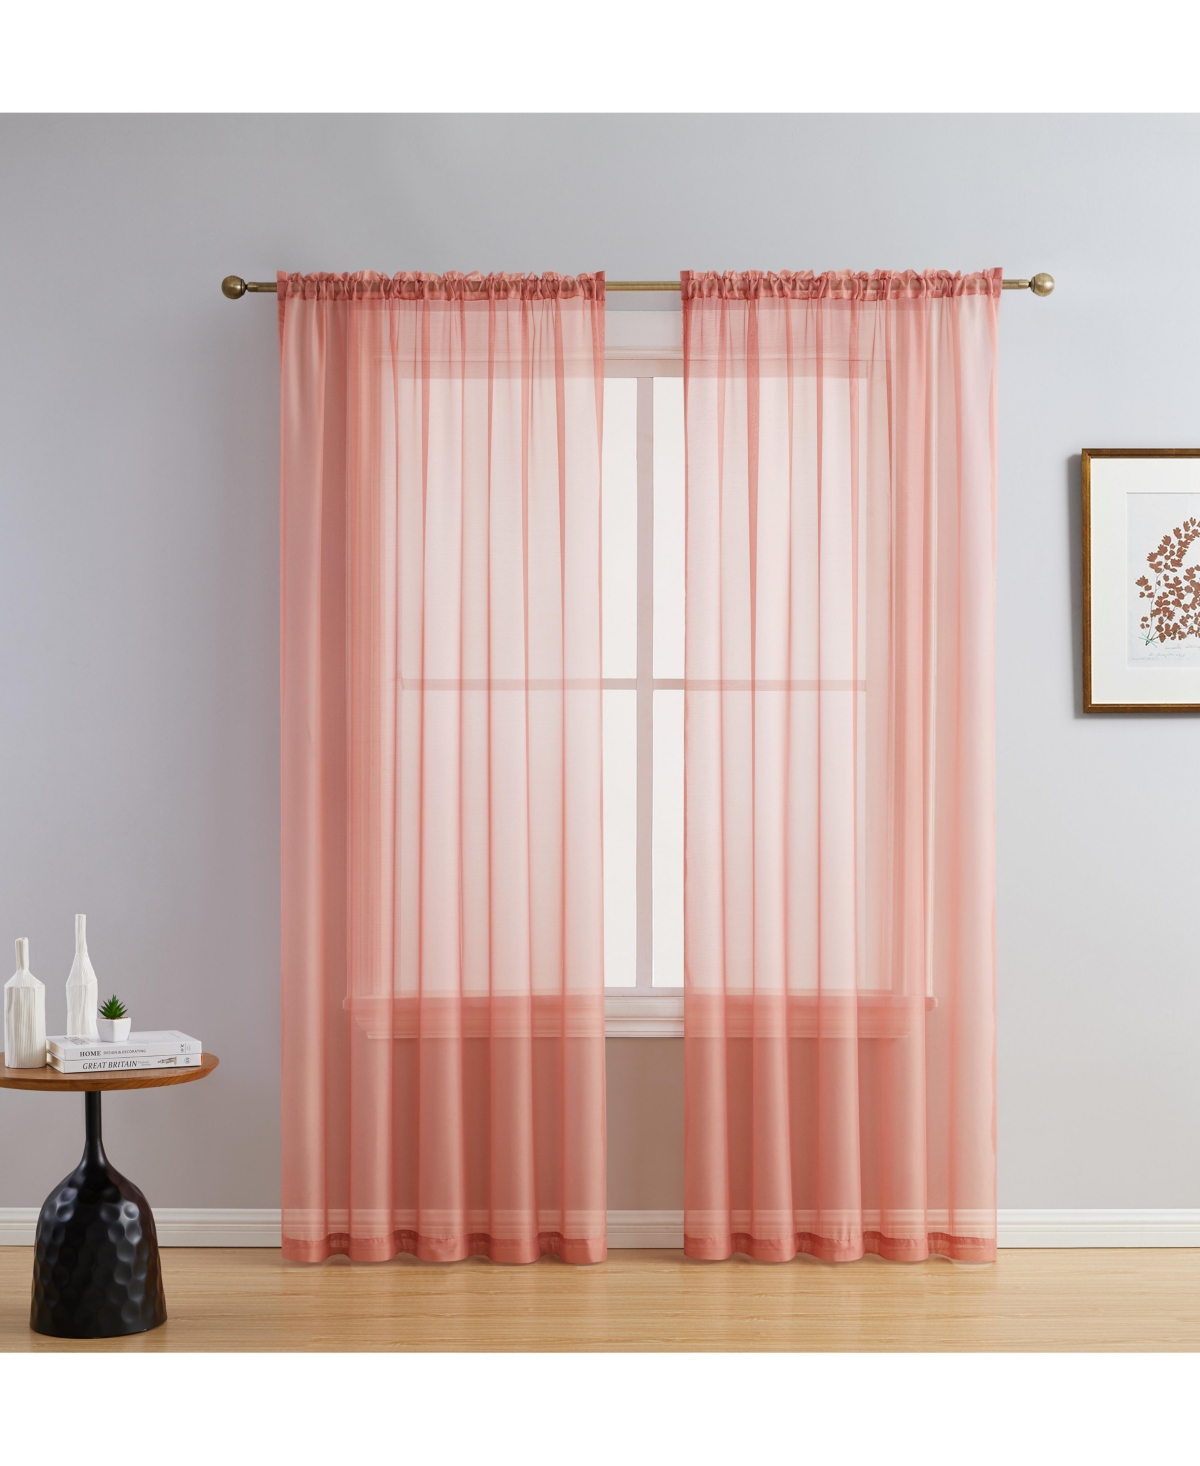 2 Pack Sheer Voile Window Curtain Sheer Panels - Blush pink